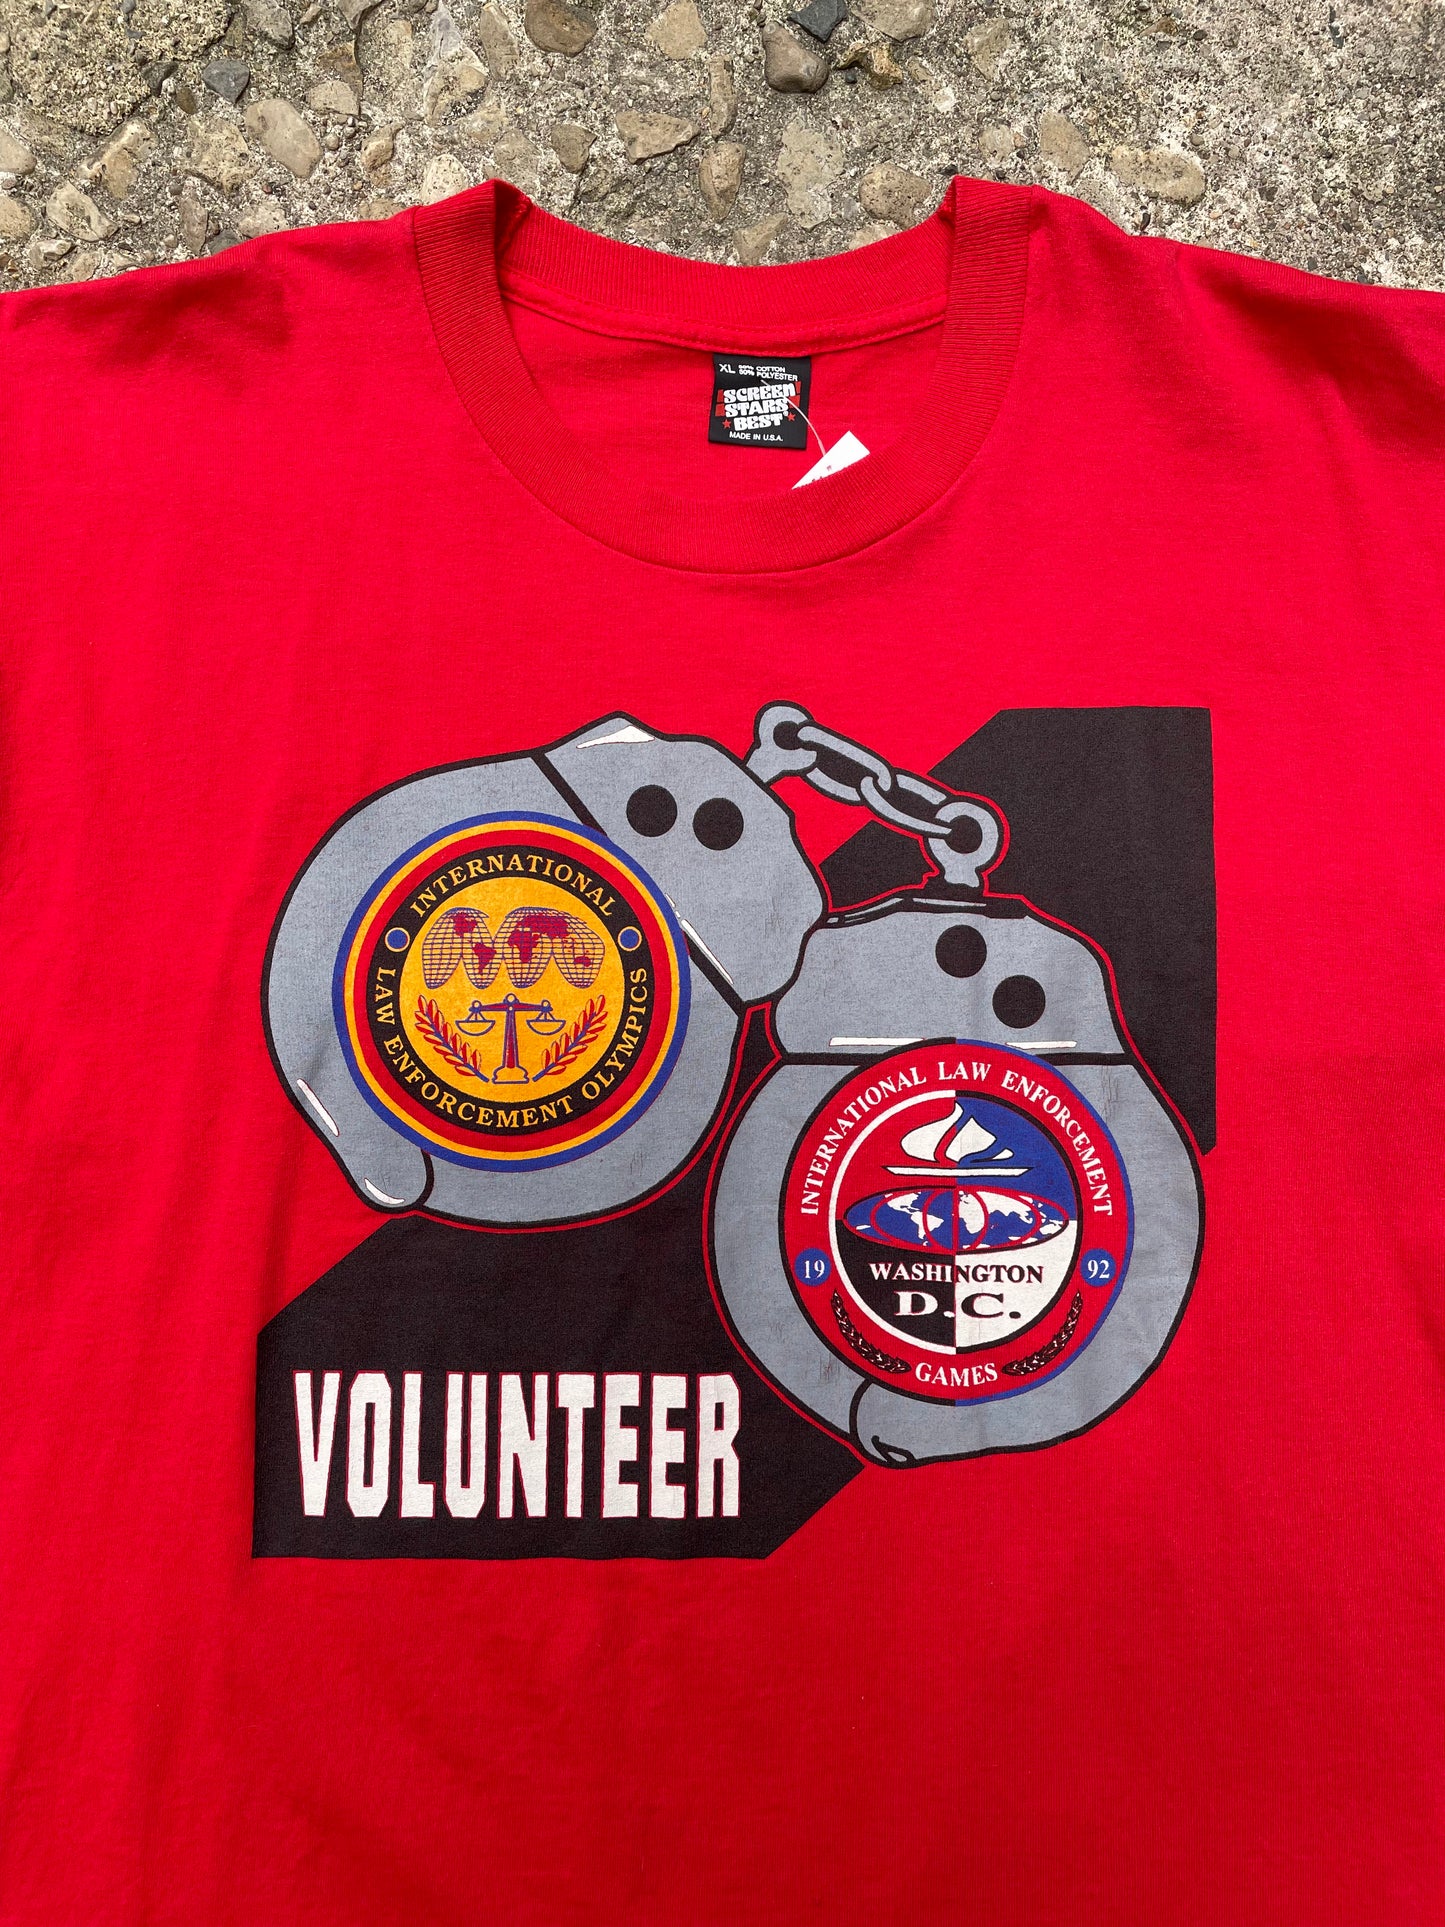 1992 International Law Enforcement Games Graphic T-Shirt - XL